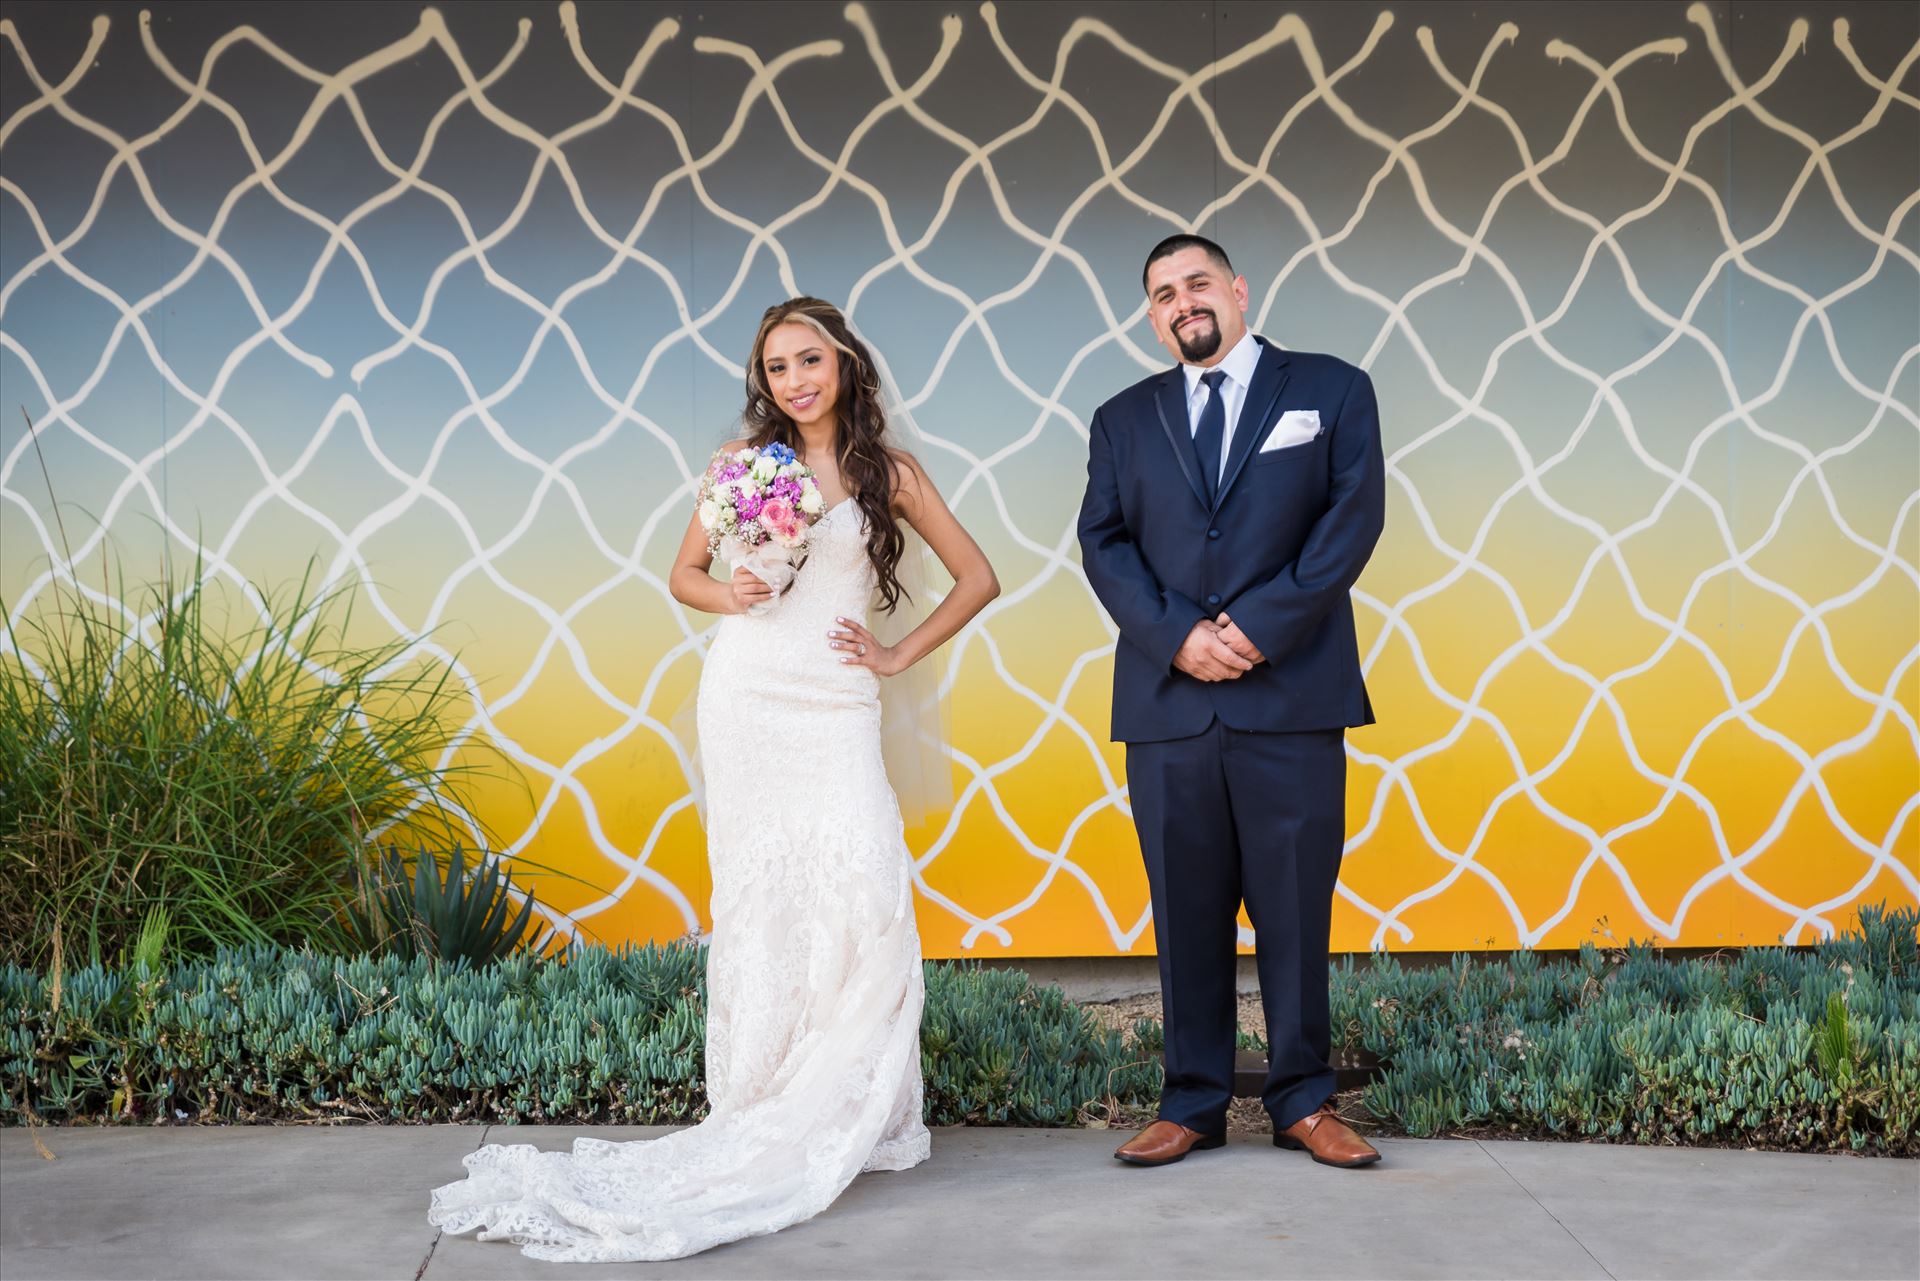 Ana and Juan 65 Wedding photography at the Kimpton Goodland Hotel in Santa Barbara California by Mirror's Edge Photography.  Bride and Groom by Retro Art Wall by Sarah Williams